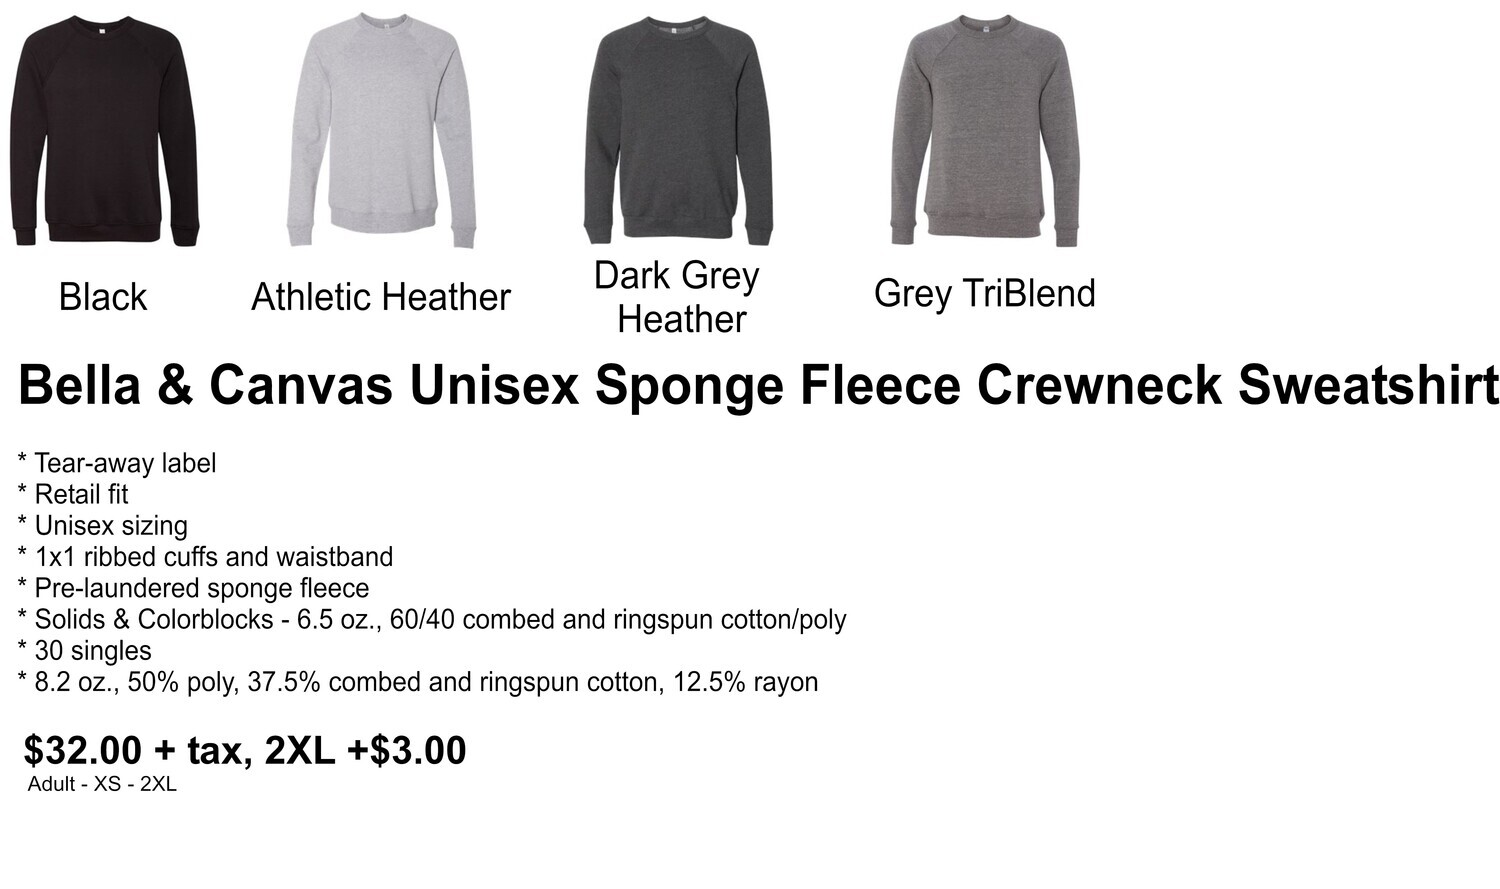 Bella & Canvas Unisex Sponge Fleece Crewneck Sweatshirt